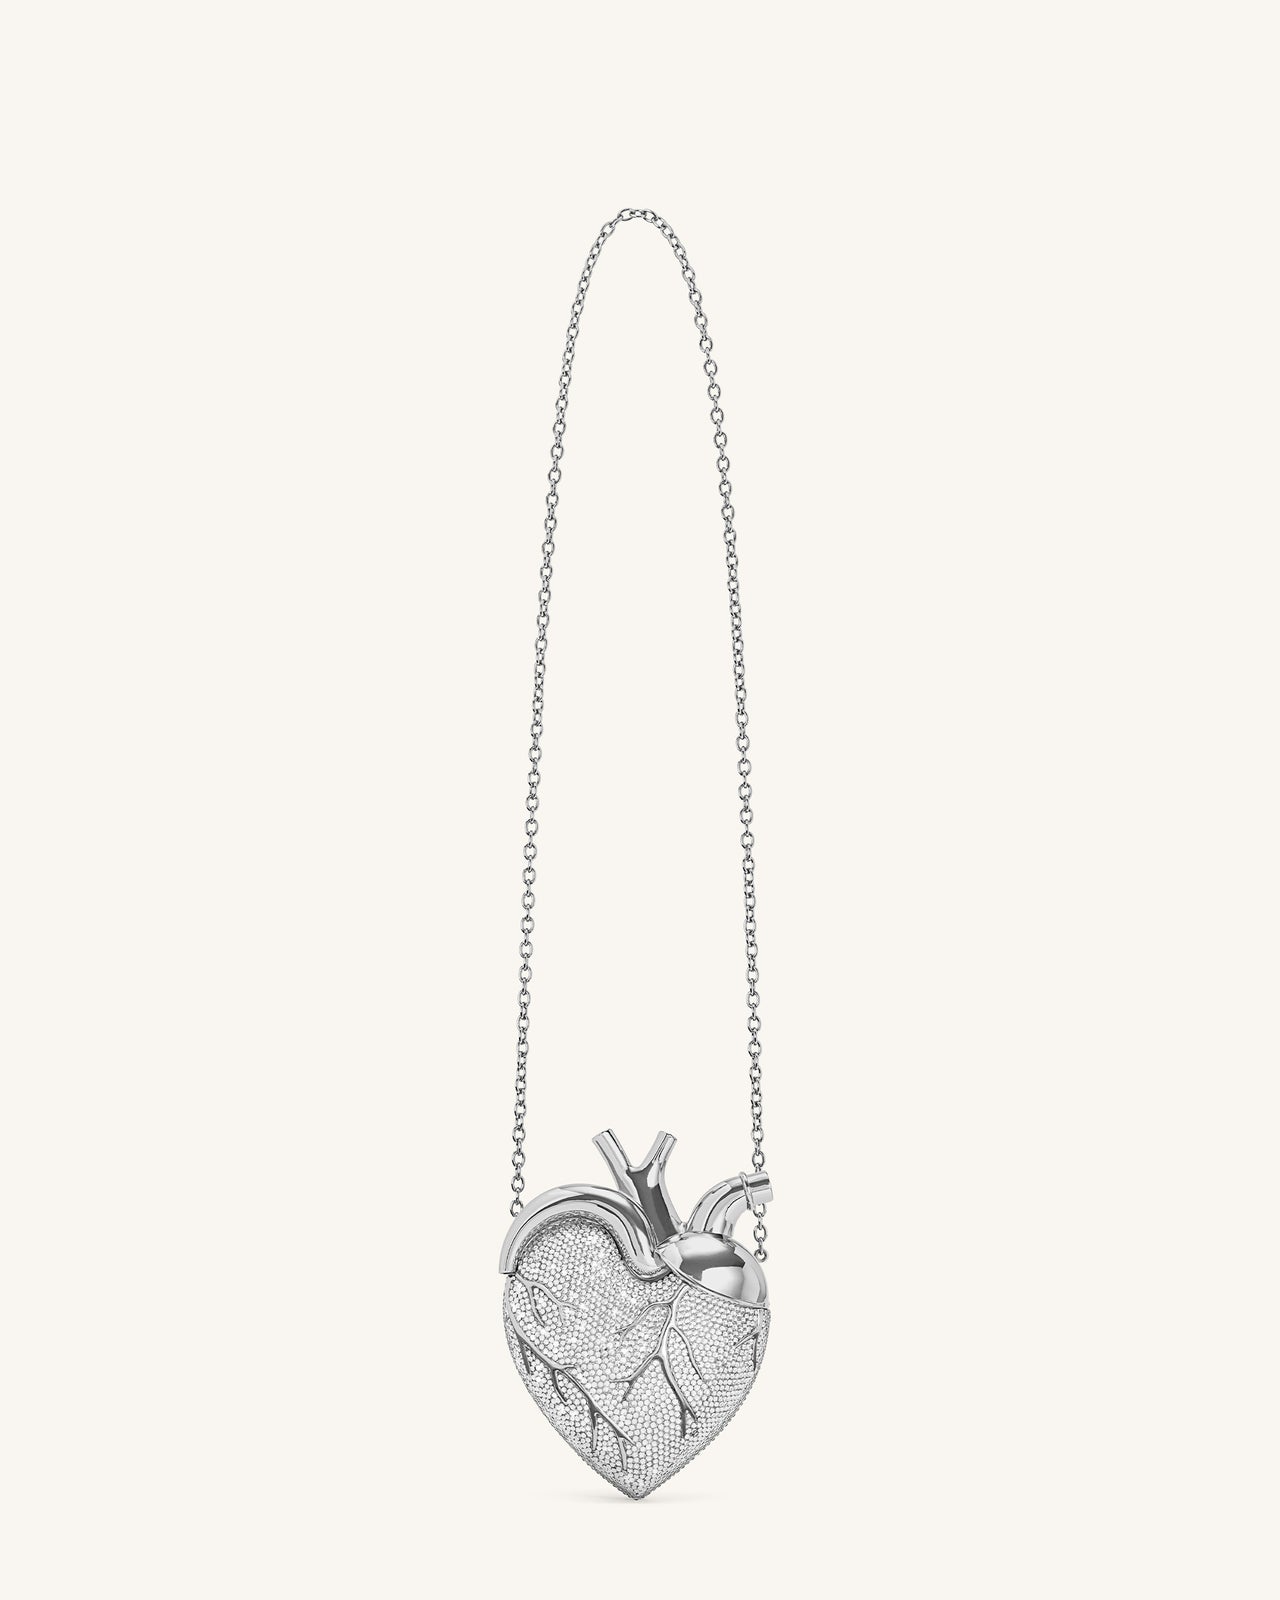 Maren Artificial Crystal Heart Shaped Bag - Silver